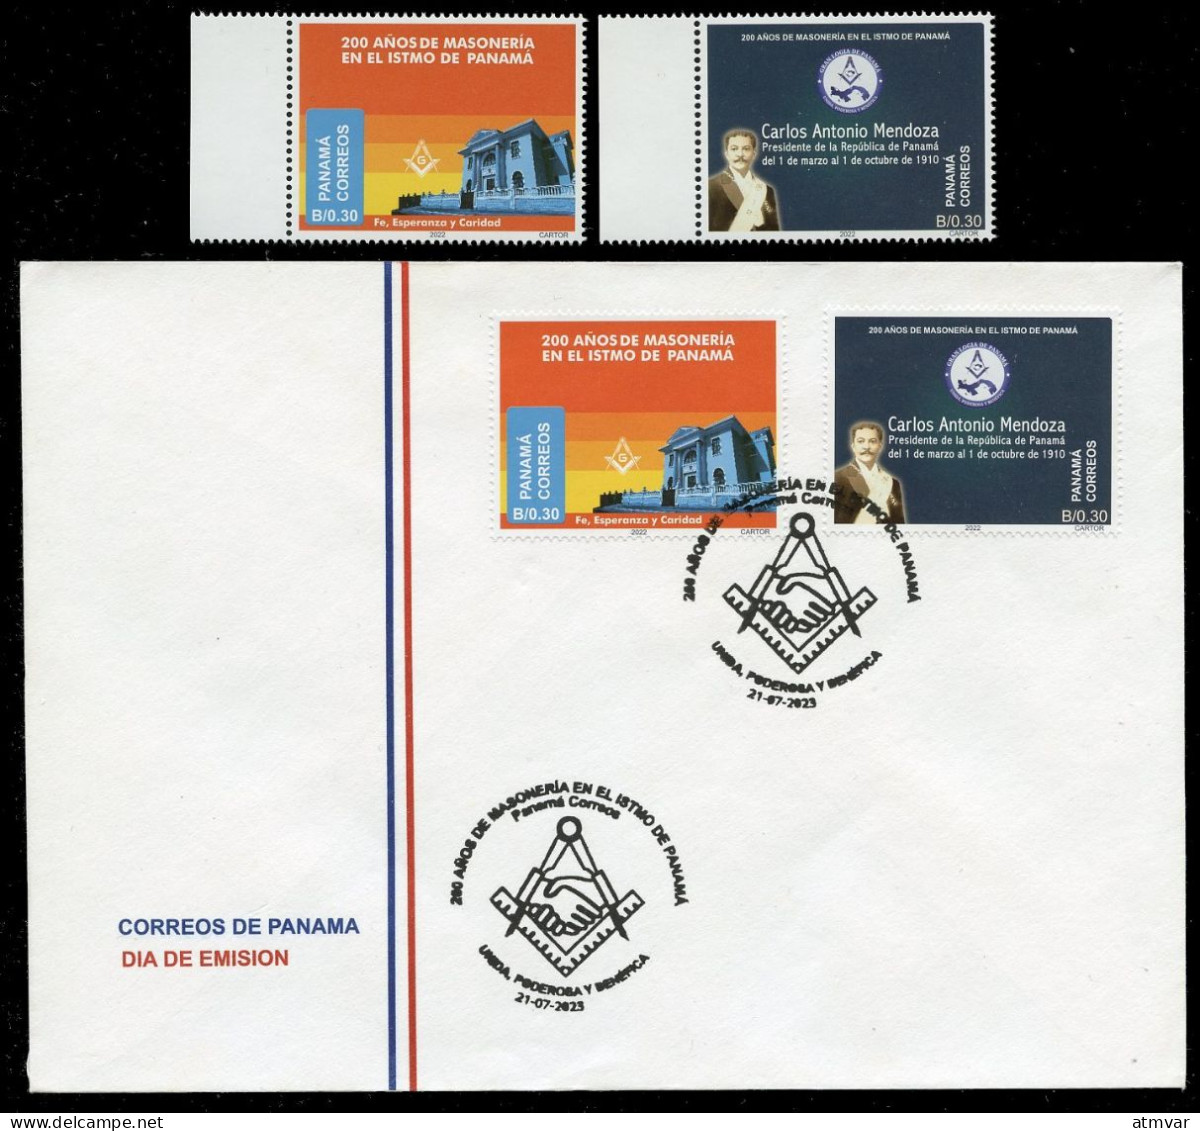 PANAMA (2023) 200 Años Masonería En Istmo Panamá, Freemasonry, Franc-maçonnerie, Freimaurerei - First Day Cover + Stamps - Panama